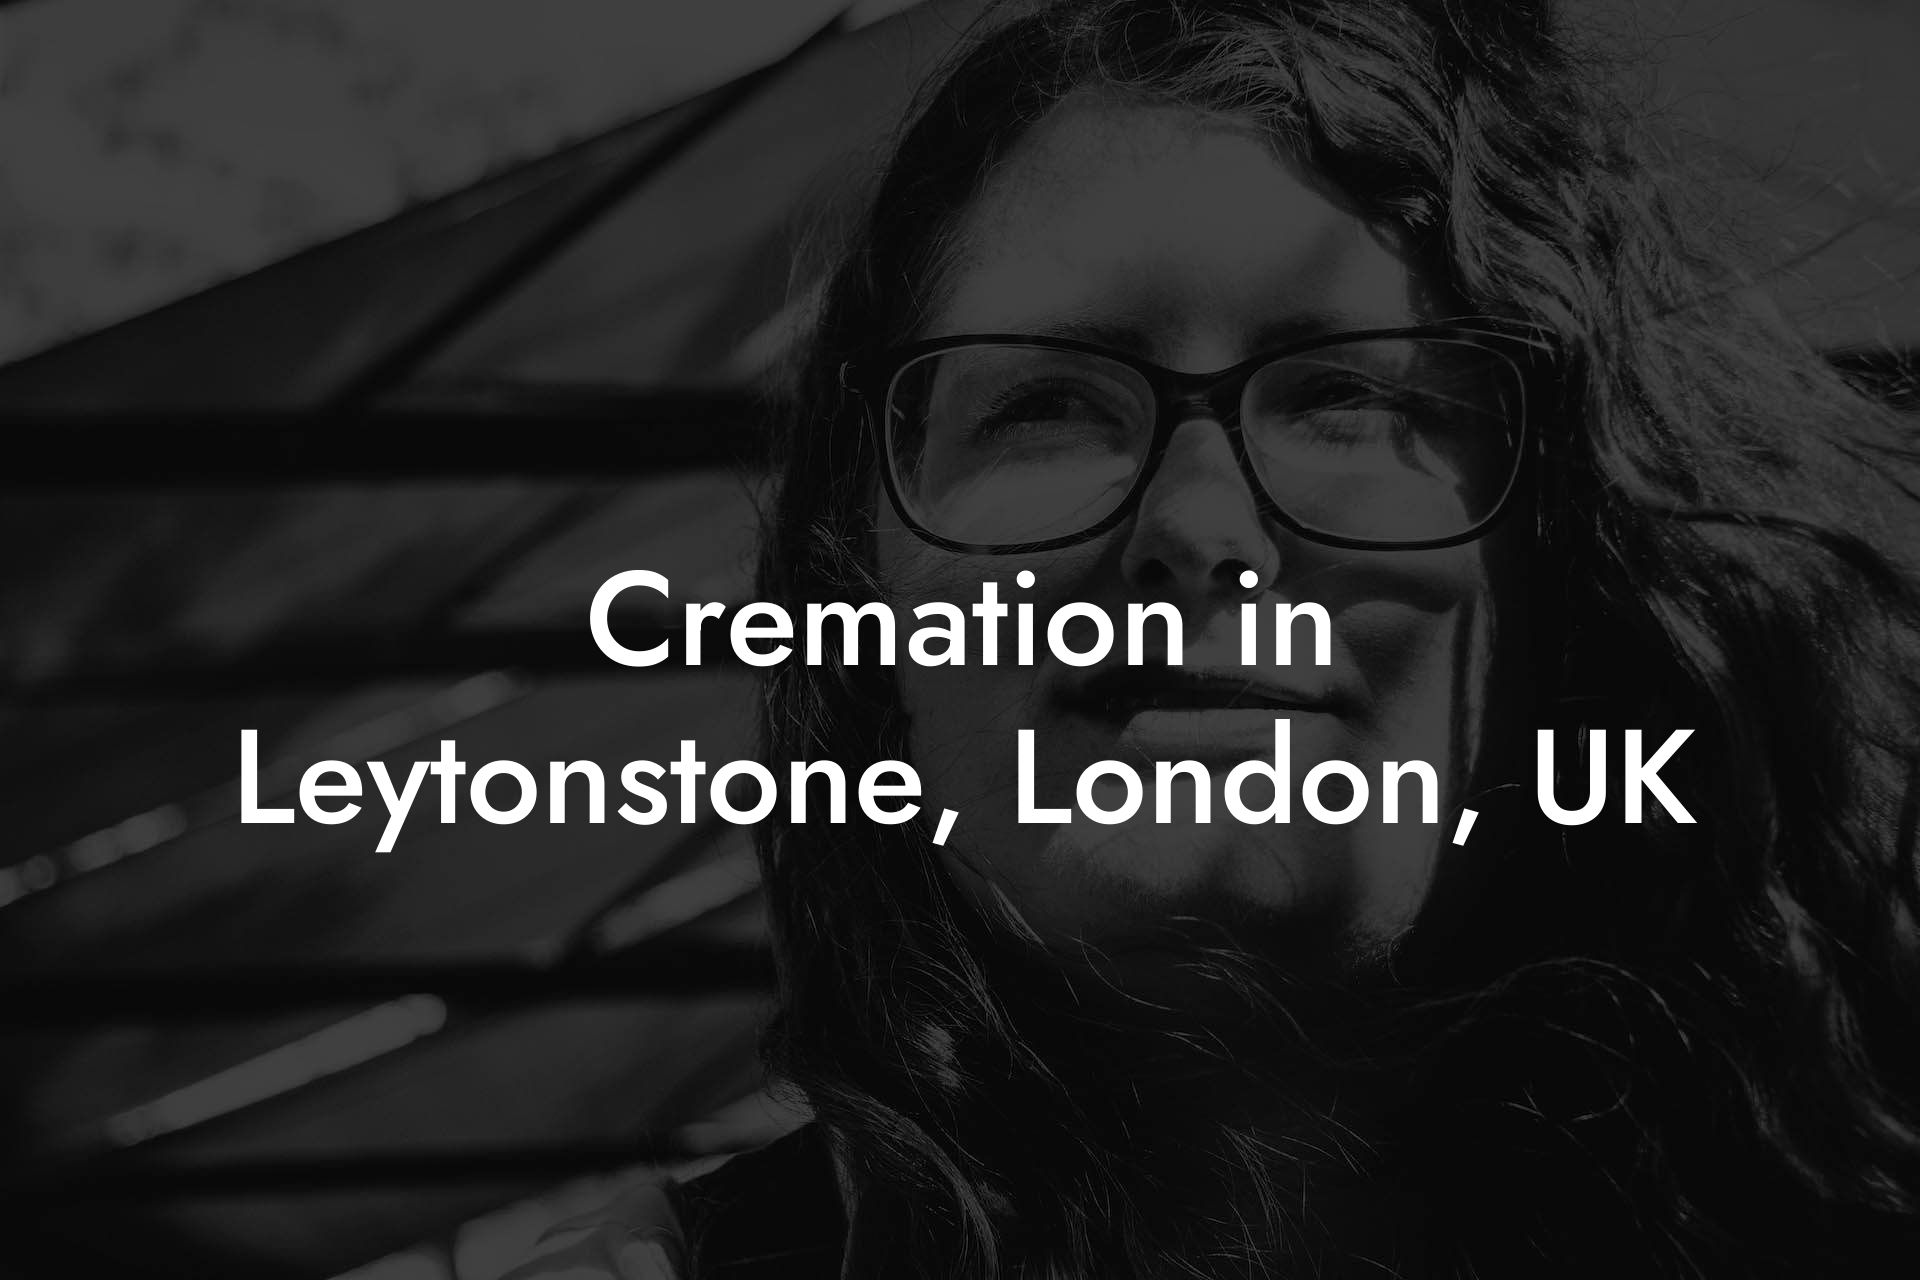 Cremation in Leytonstone, London, UK